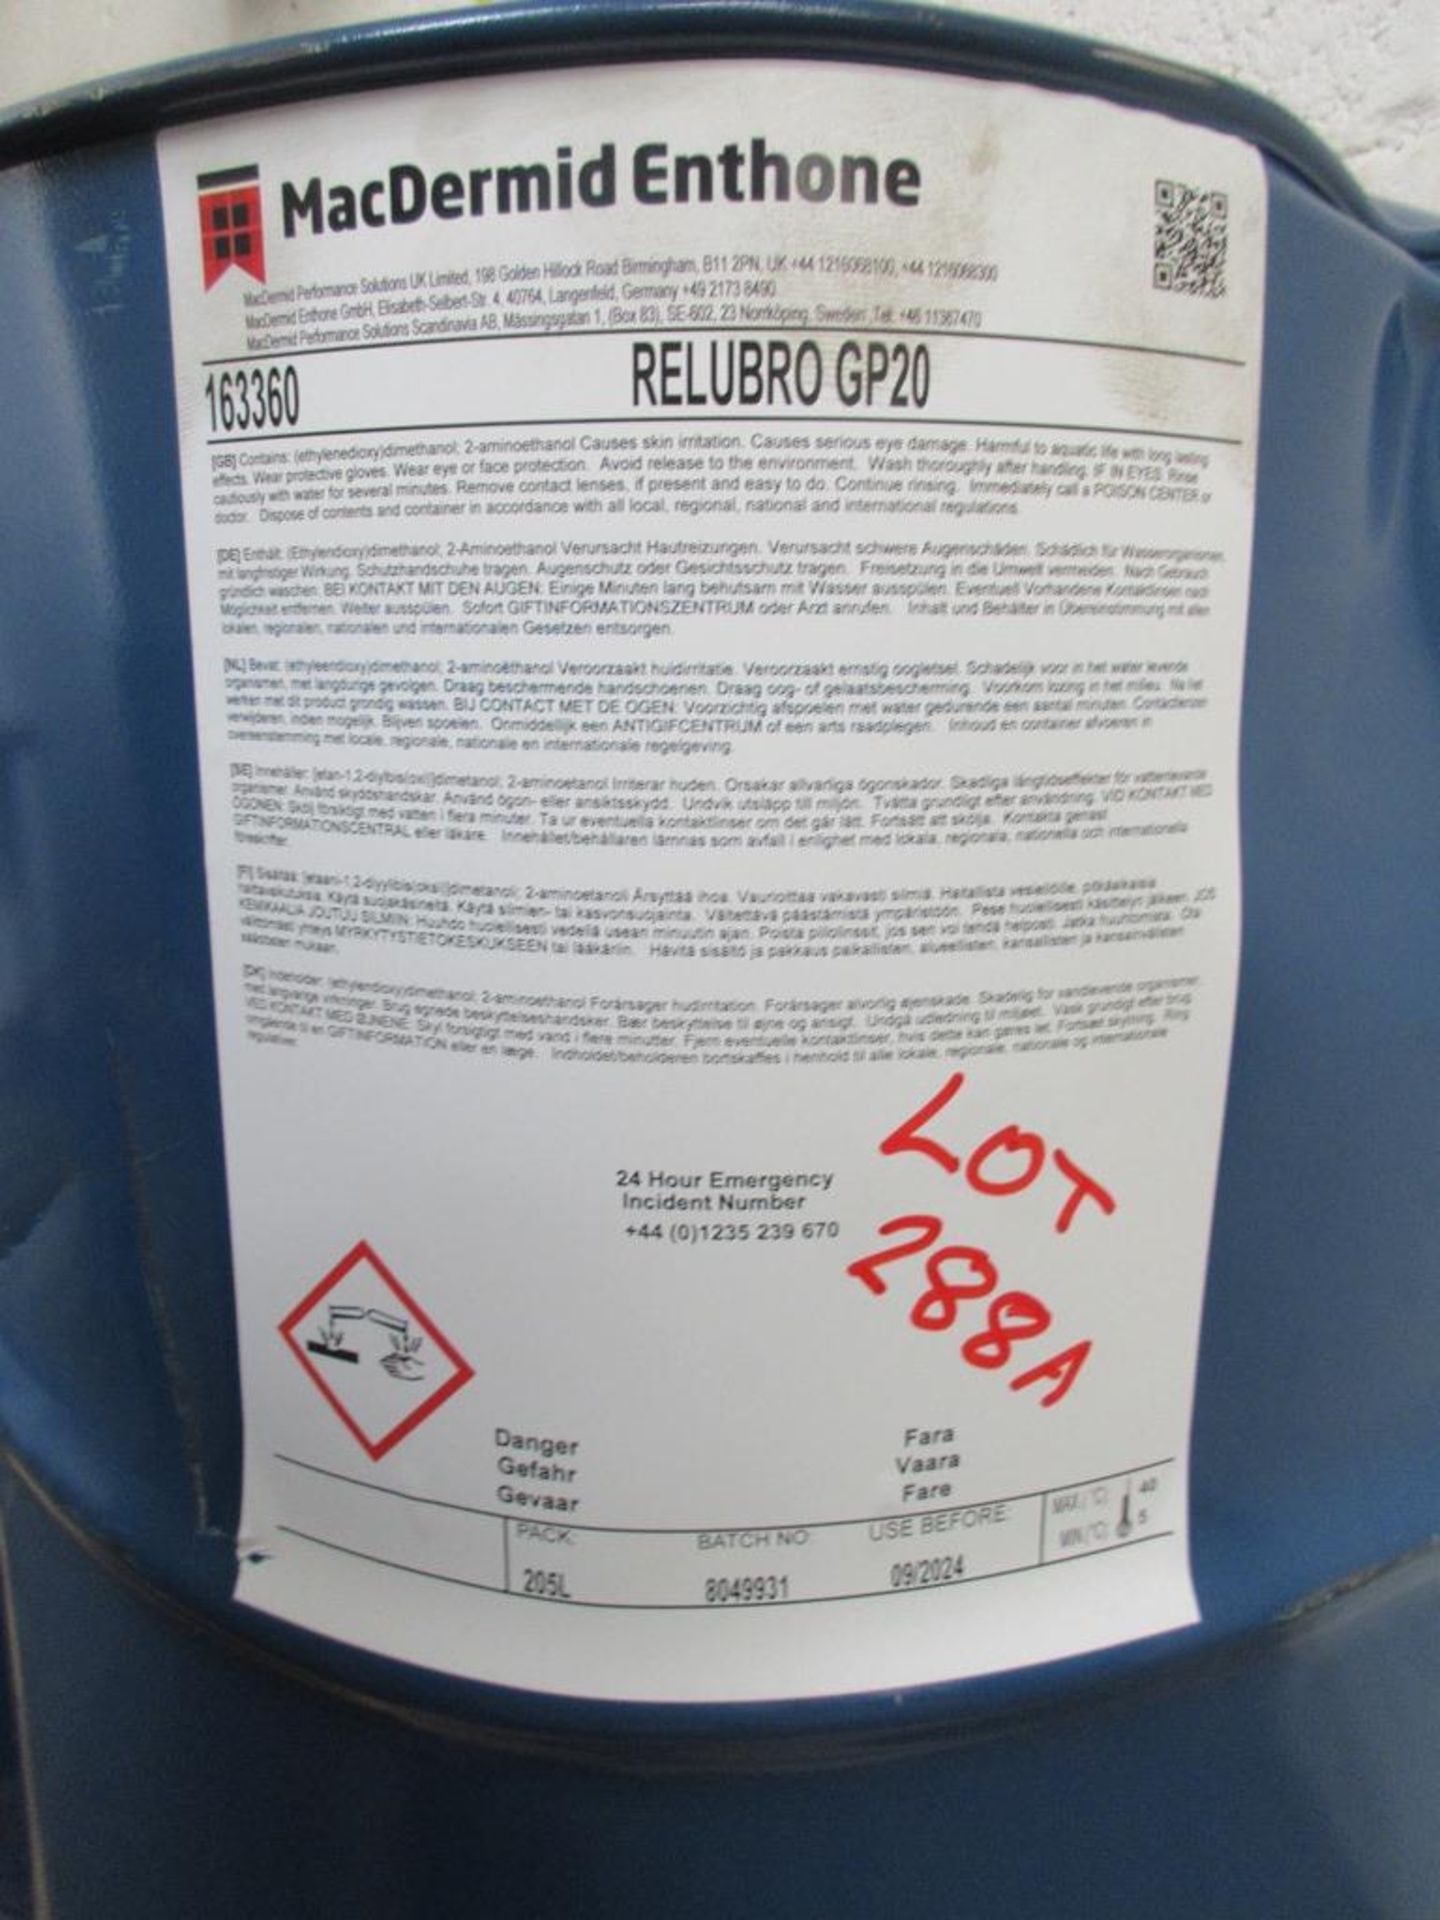 Lubetool 6000 Nine corrosion protection Spray 105, Ballistool Universal spray, two TF-90 fast drying - Image 2 of 4